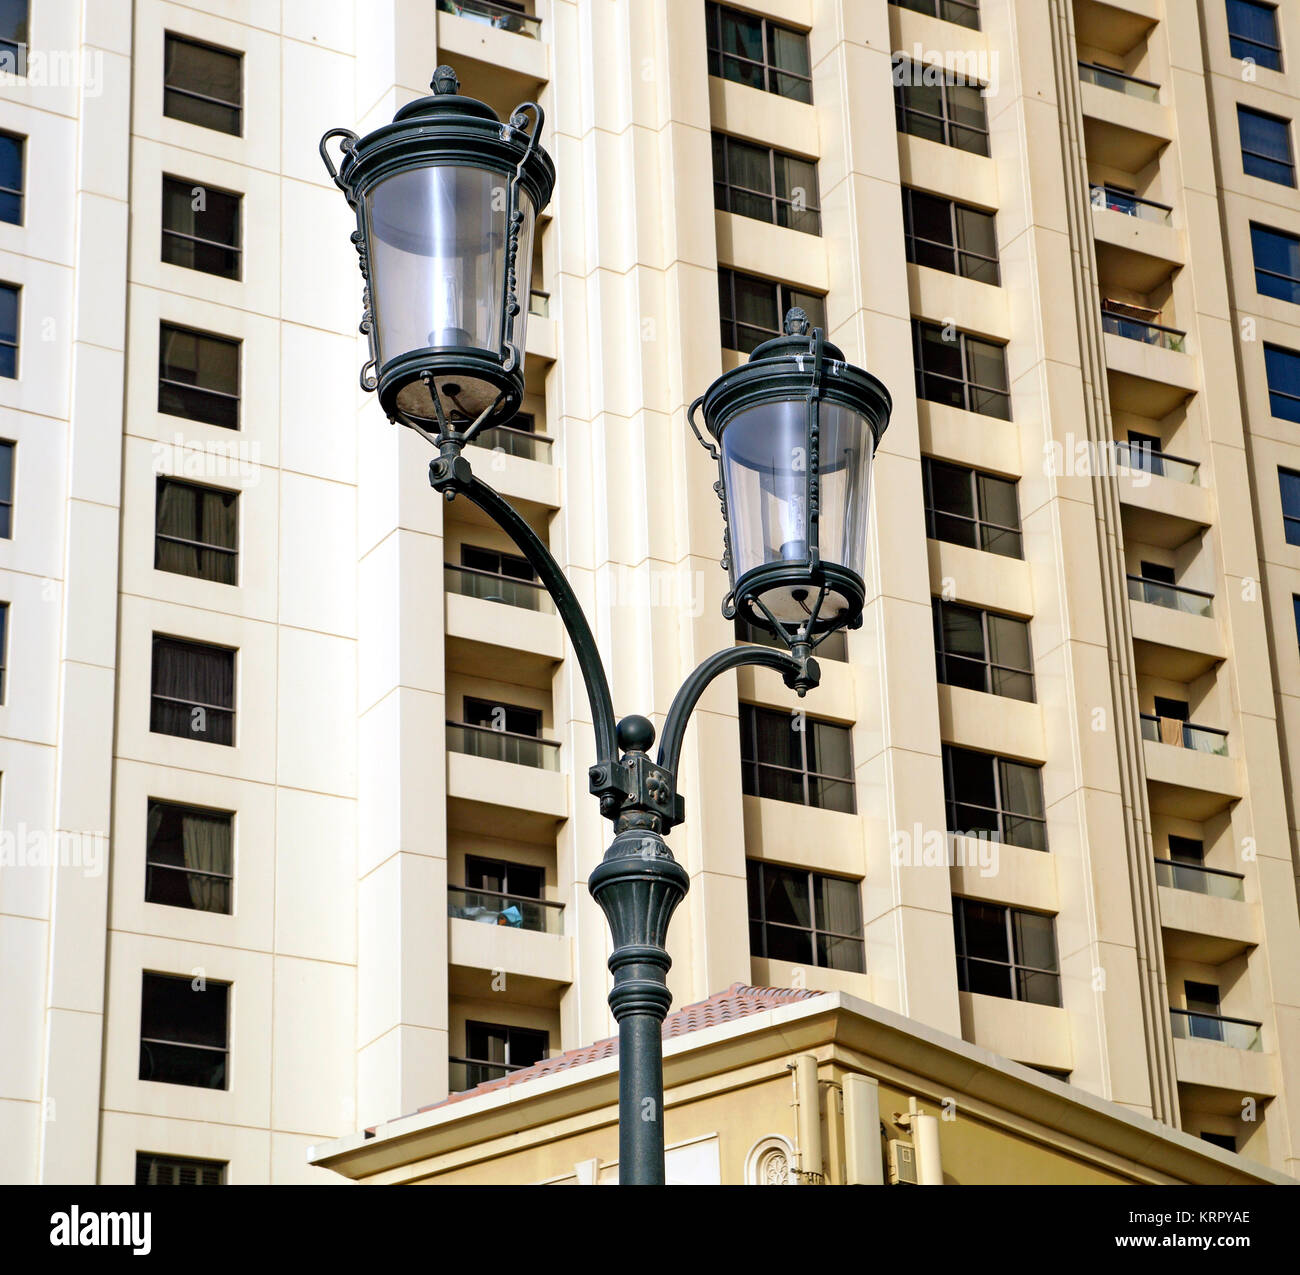 lamp street lighting Stock Photo - Alamy